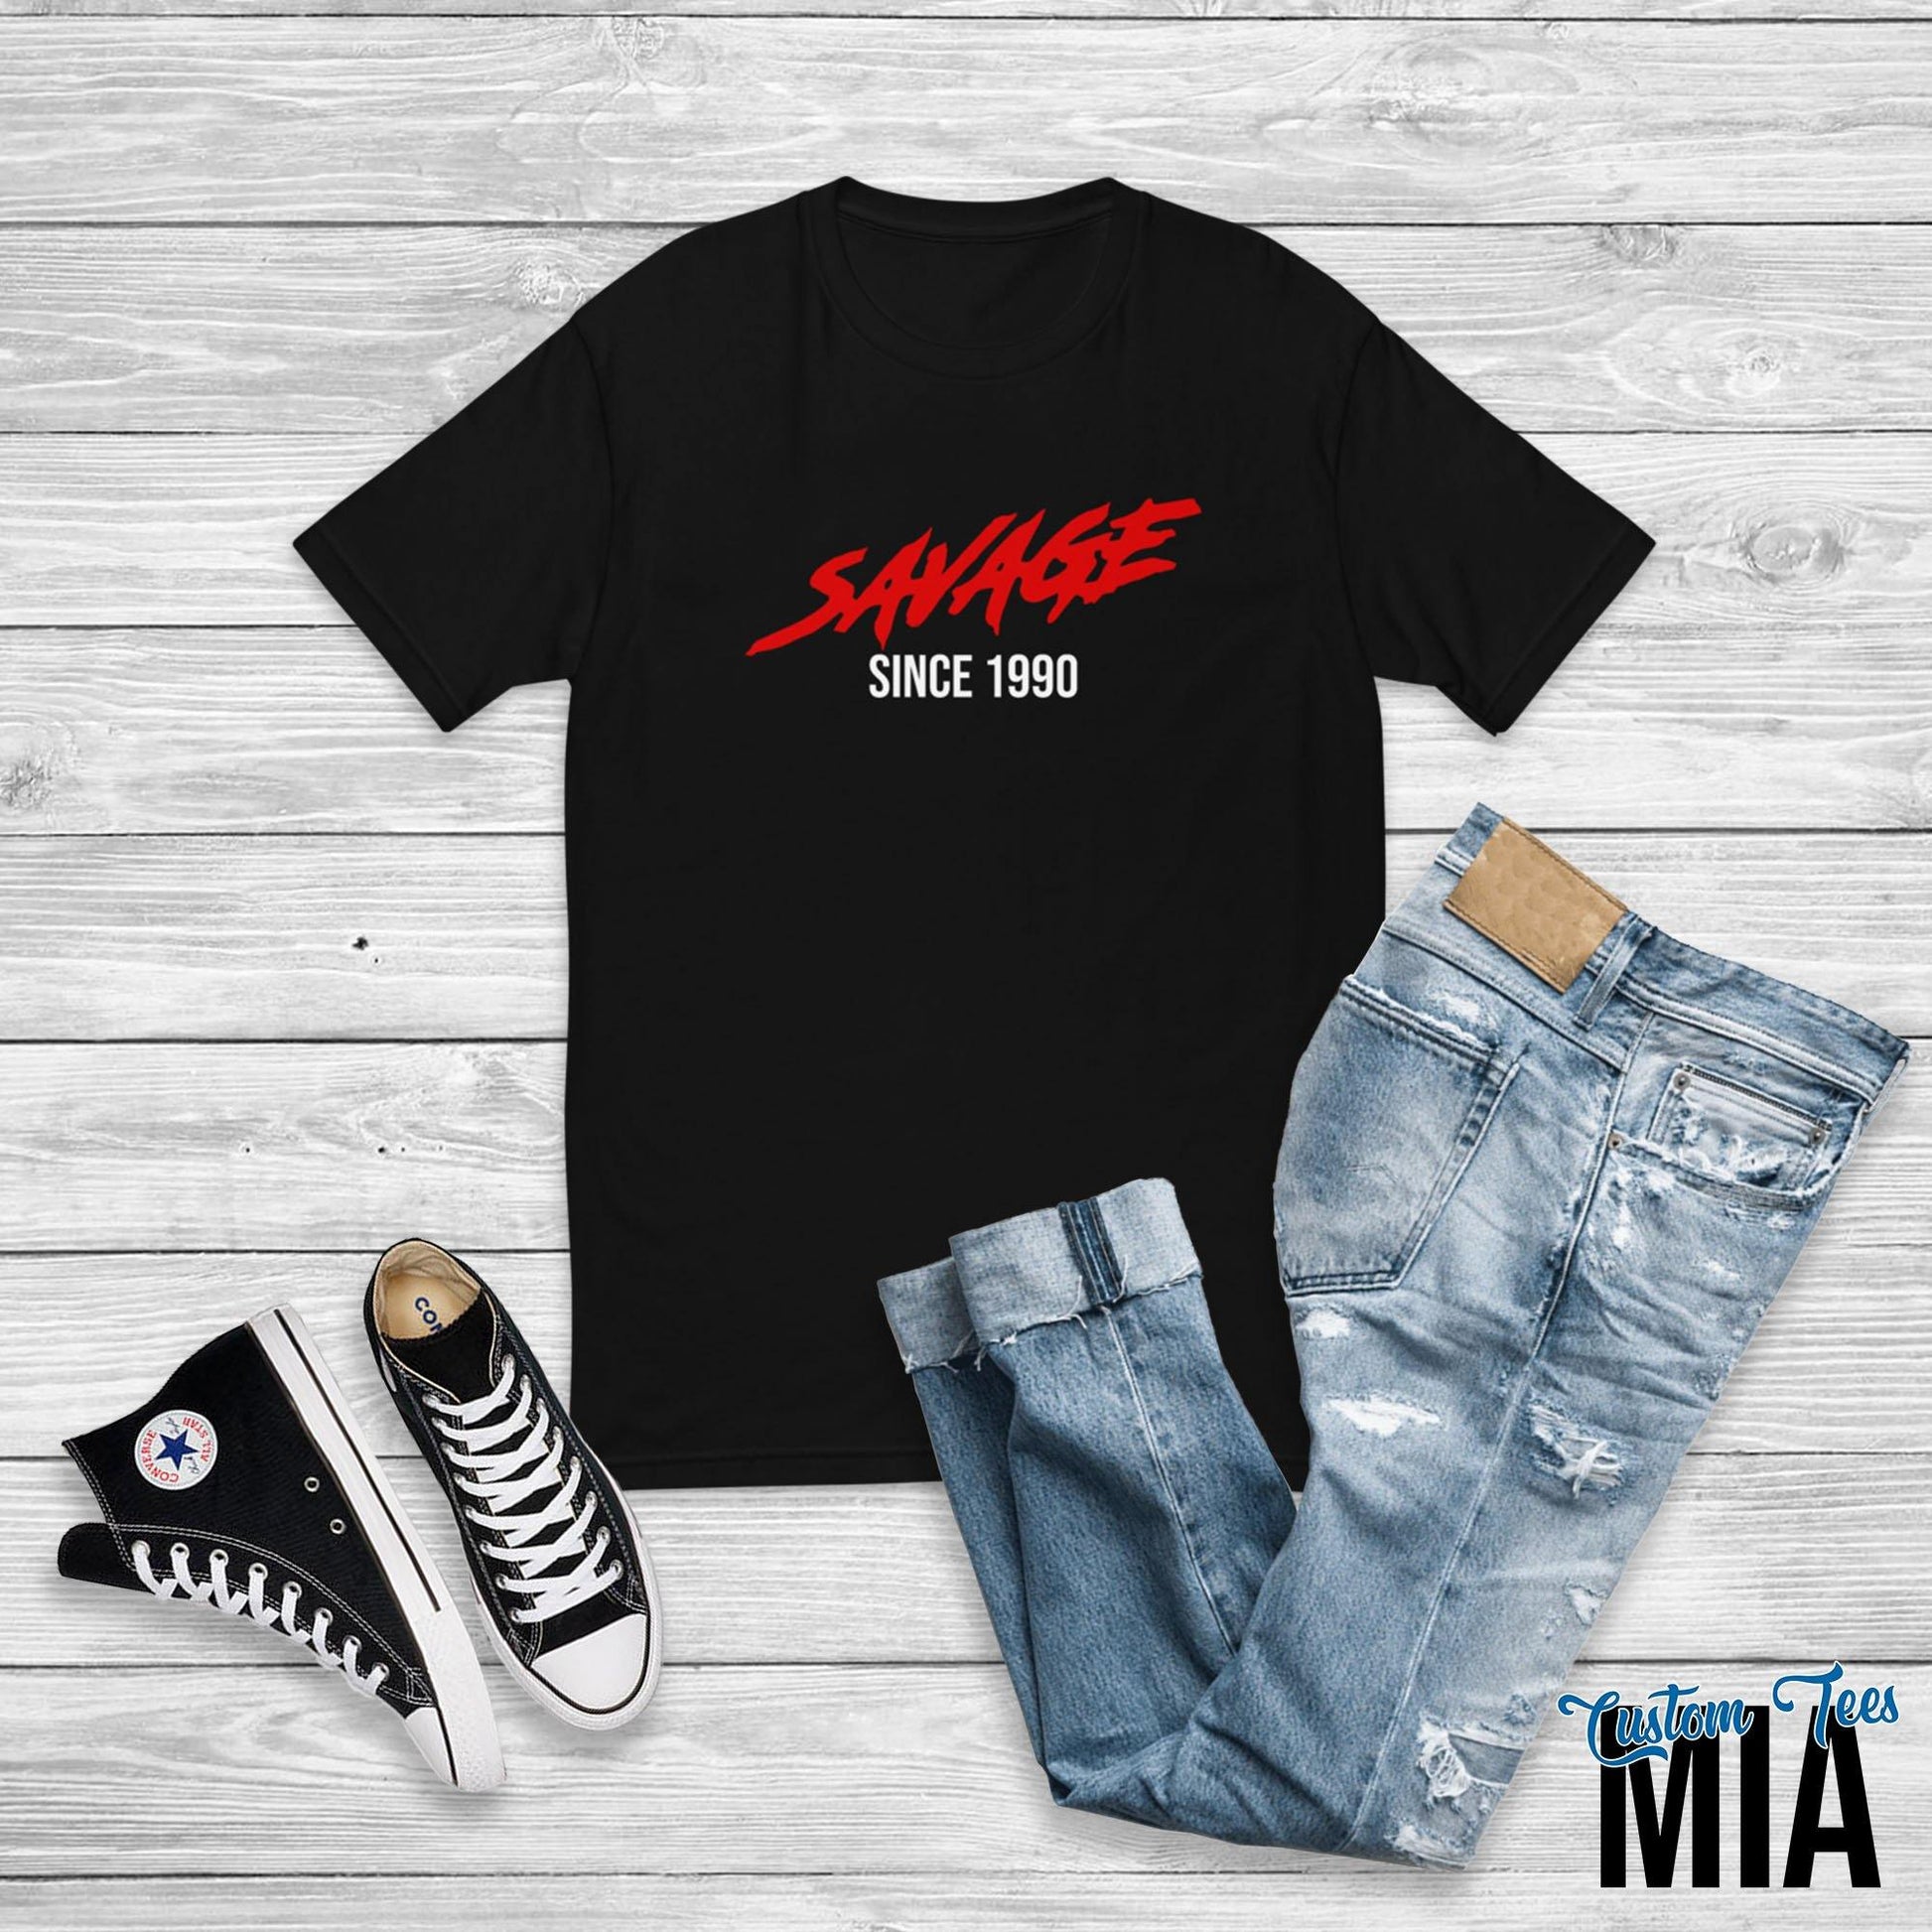 Savage Since 1990 Shirt - Custom Tees MIA